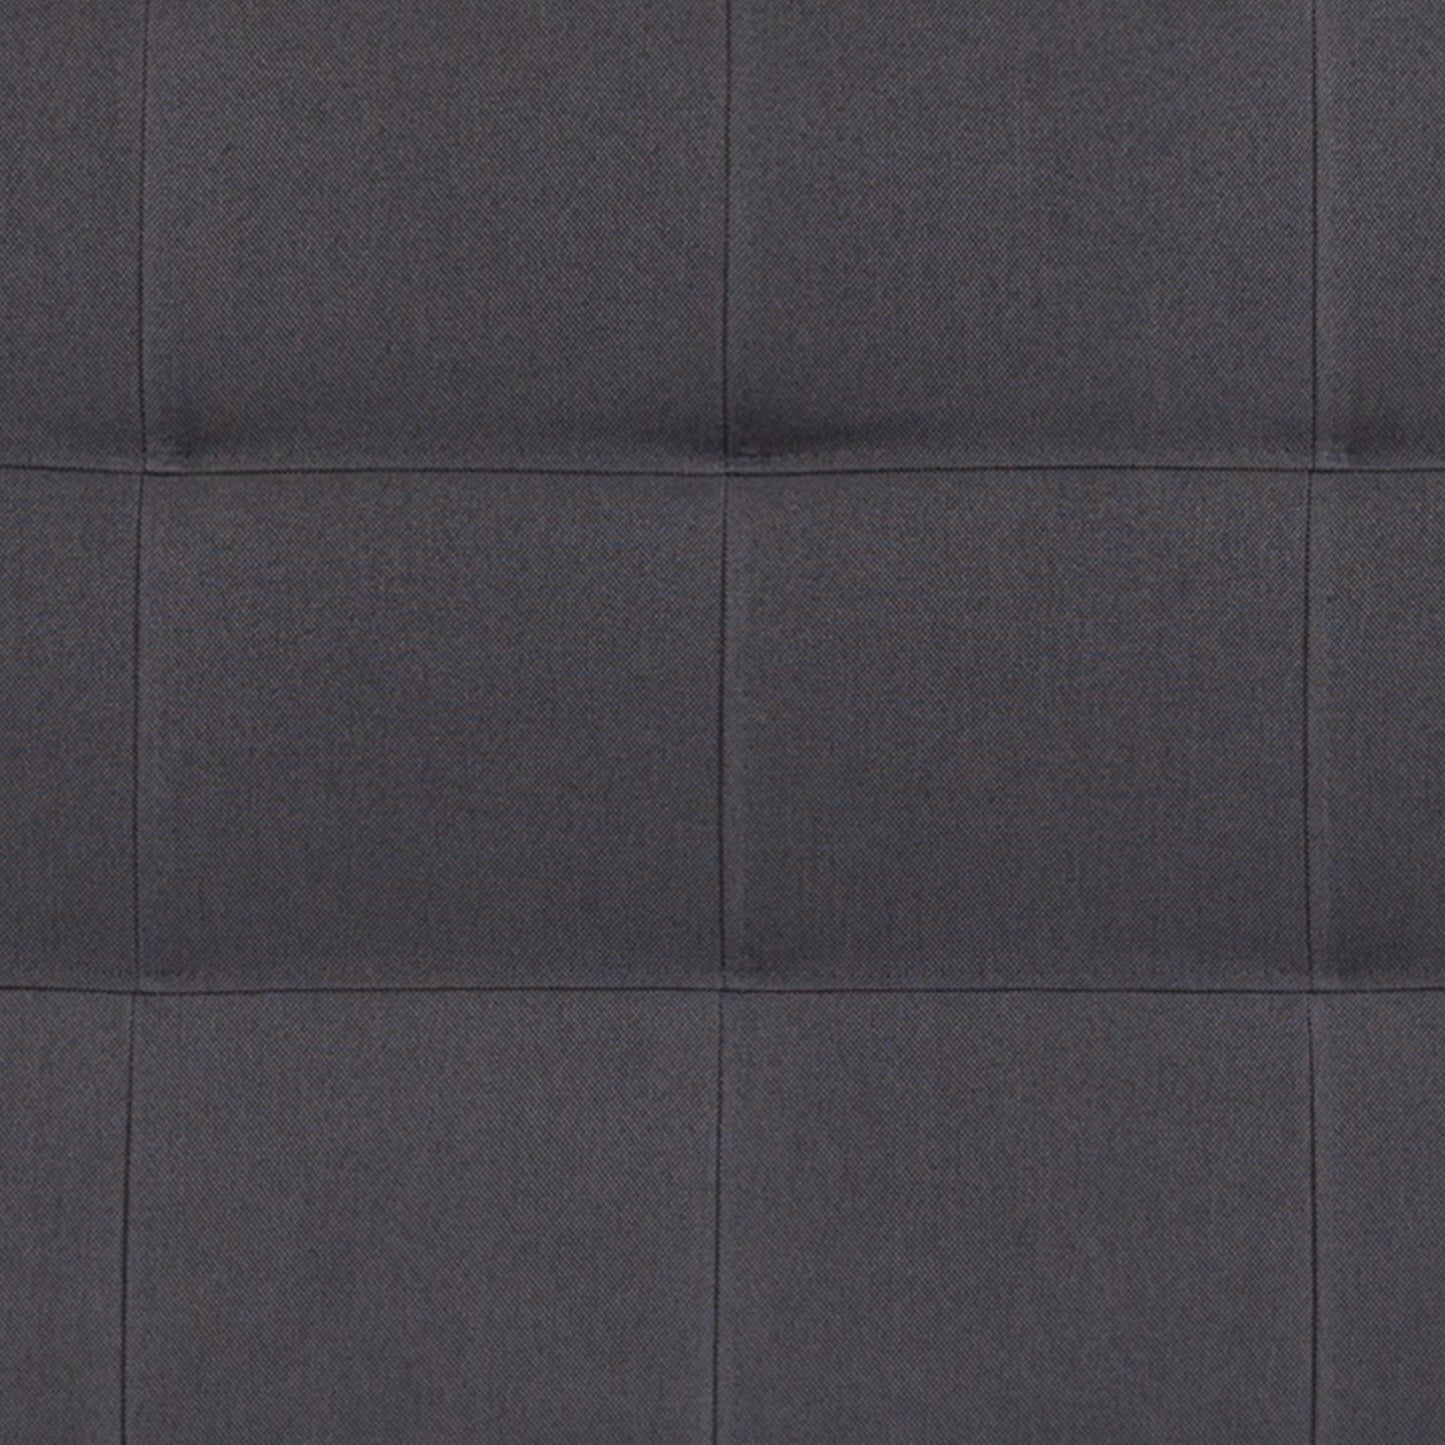 King Headboard-Gray Fabric HG-HB1704-K-DG-GG